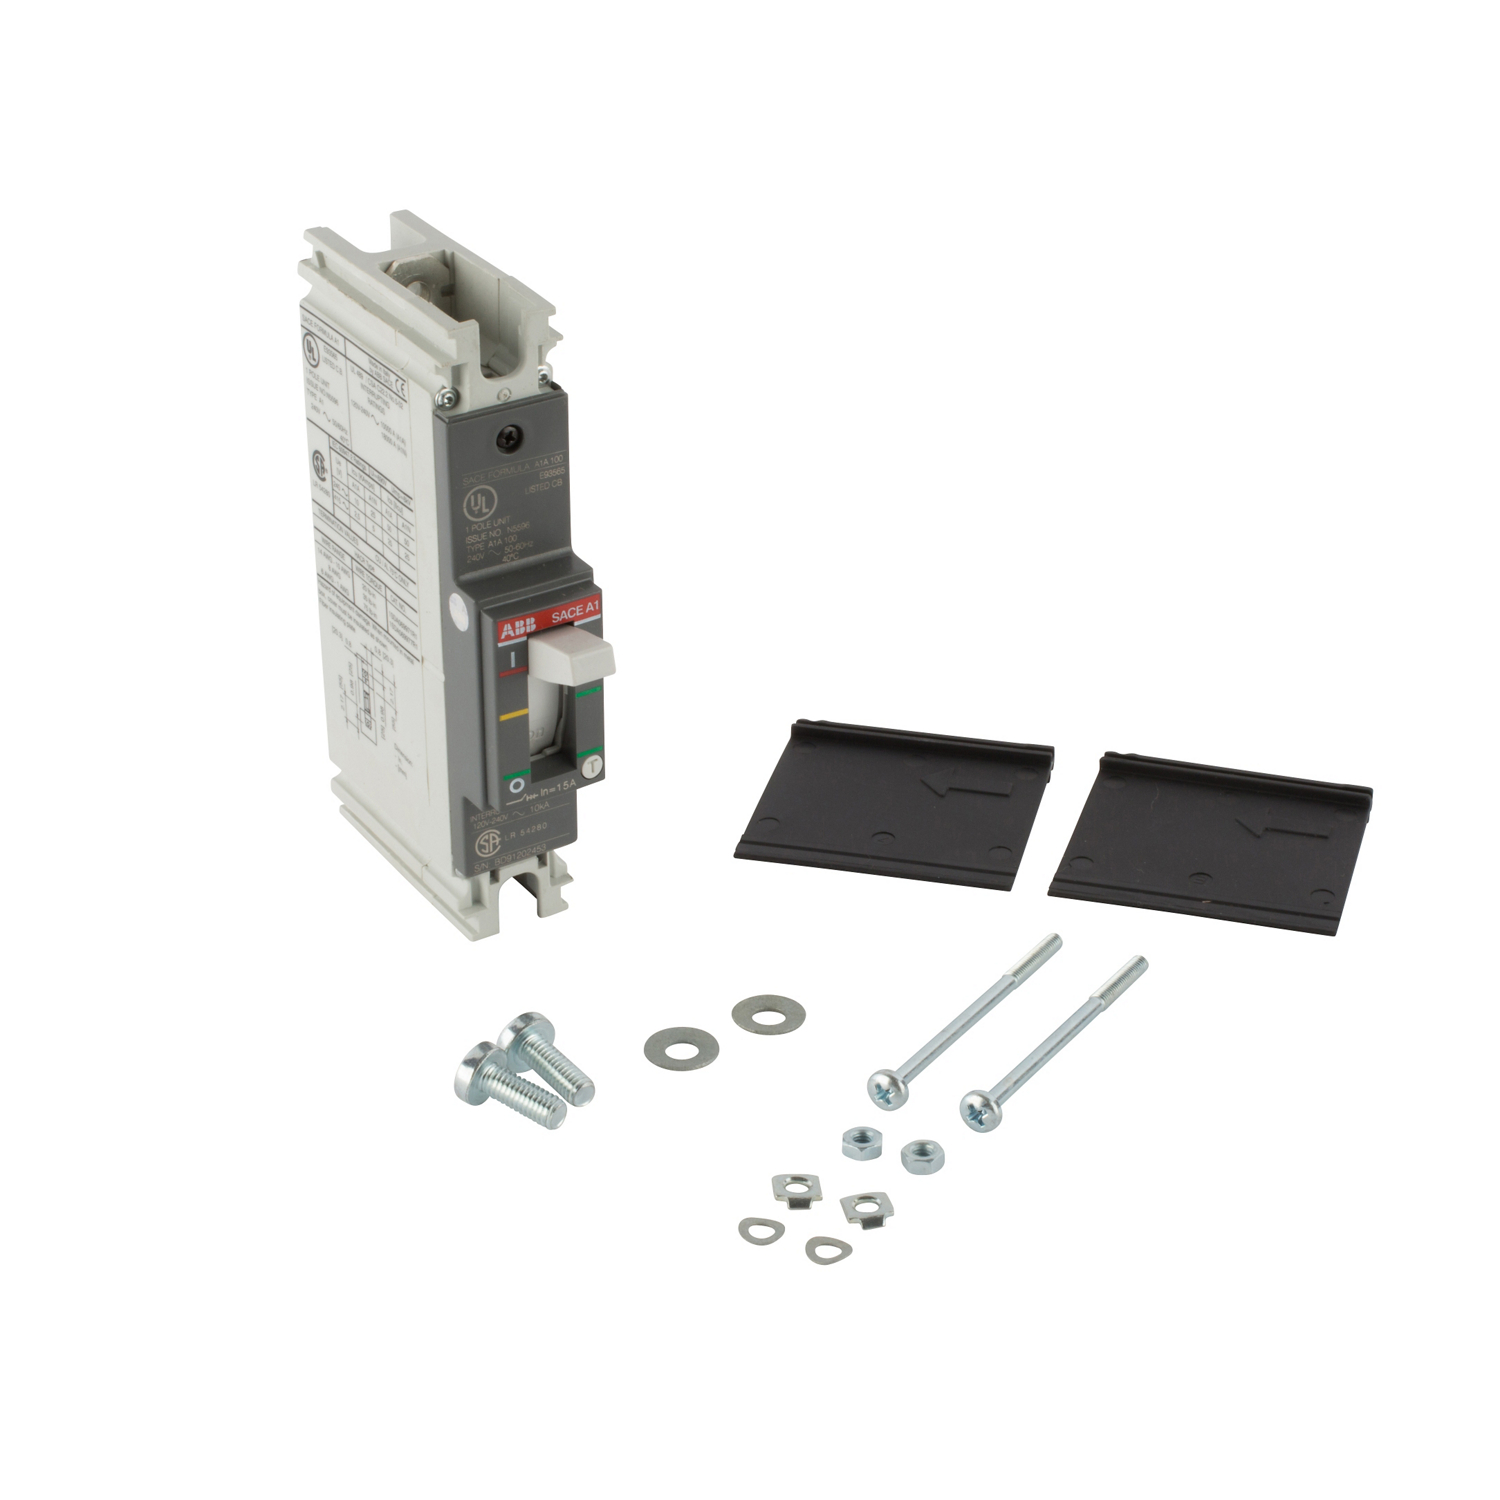 ABB A1A015TW-1 FORMULA Molded Case Circuit Breaker